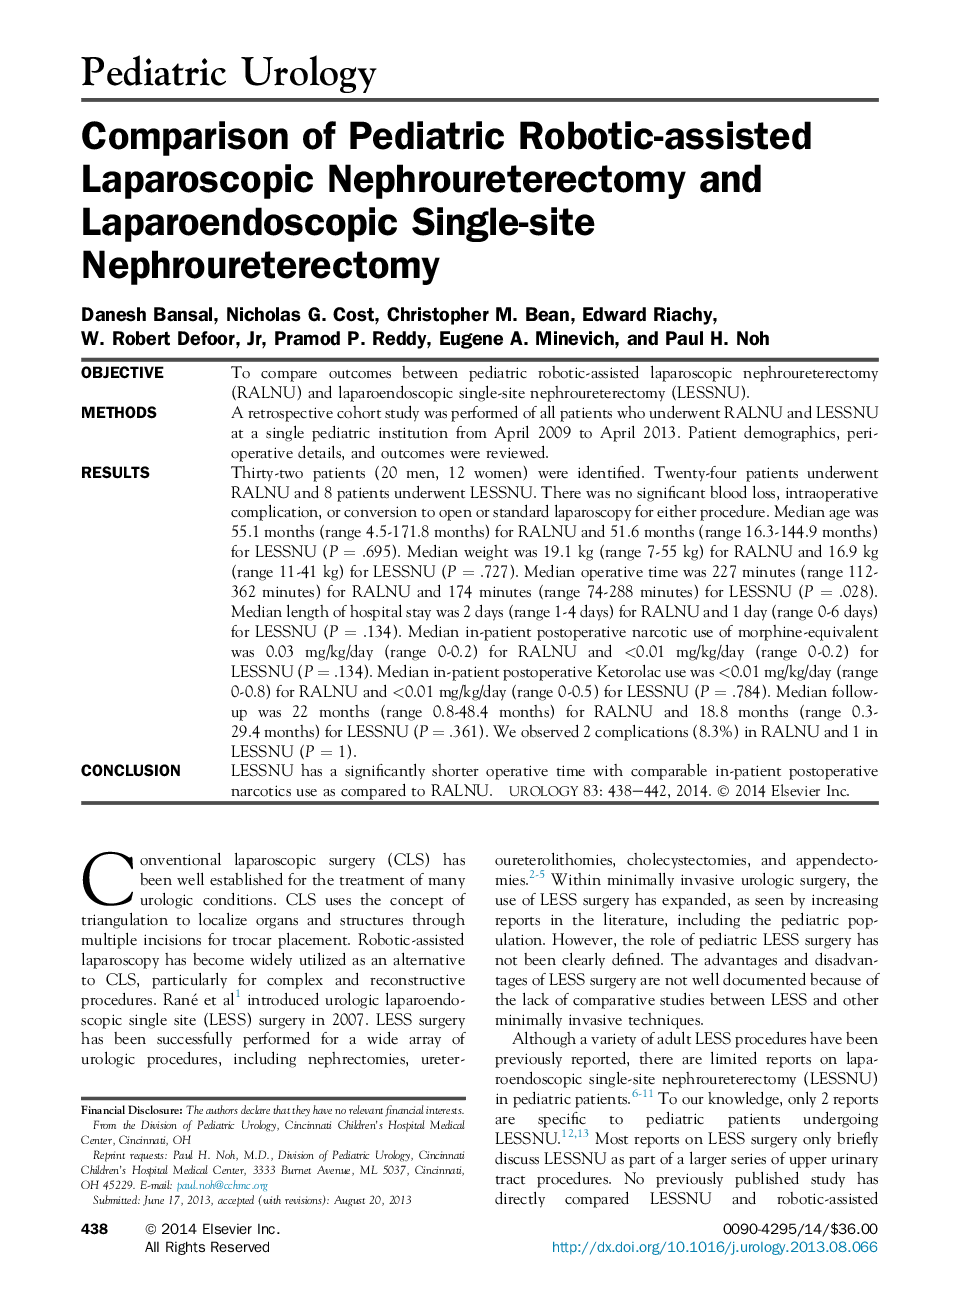 Comparison of Pediatric Robotic-assisted Laparoscopic Nephroureterectomy and Laparoendoscopic Single-site Nephroureterectomy 